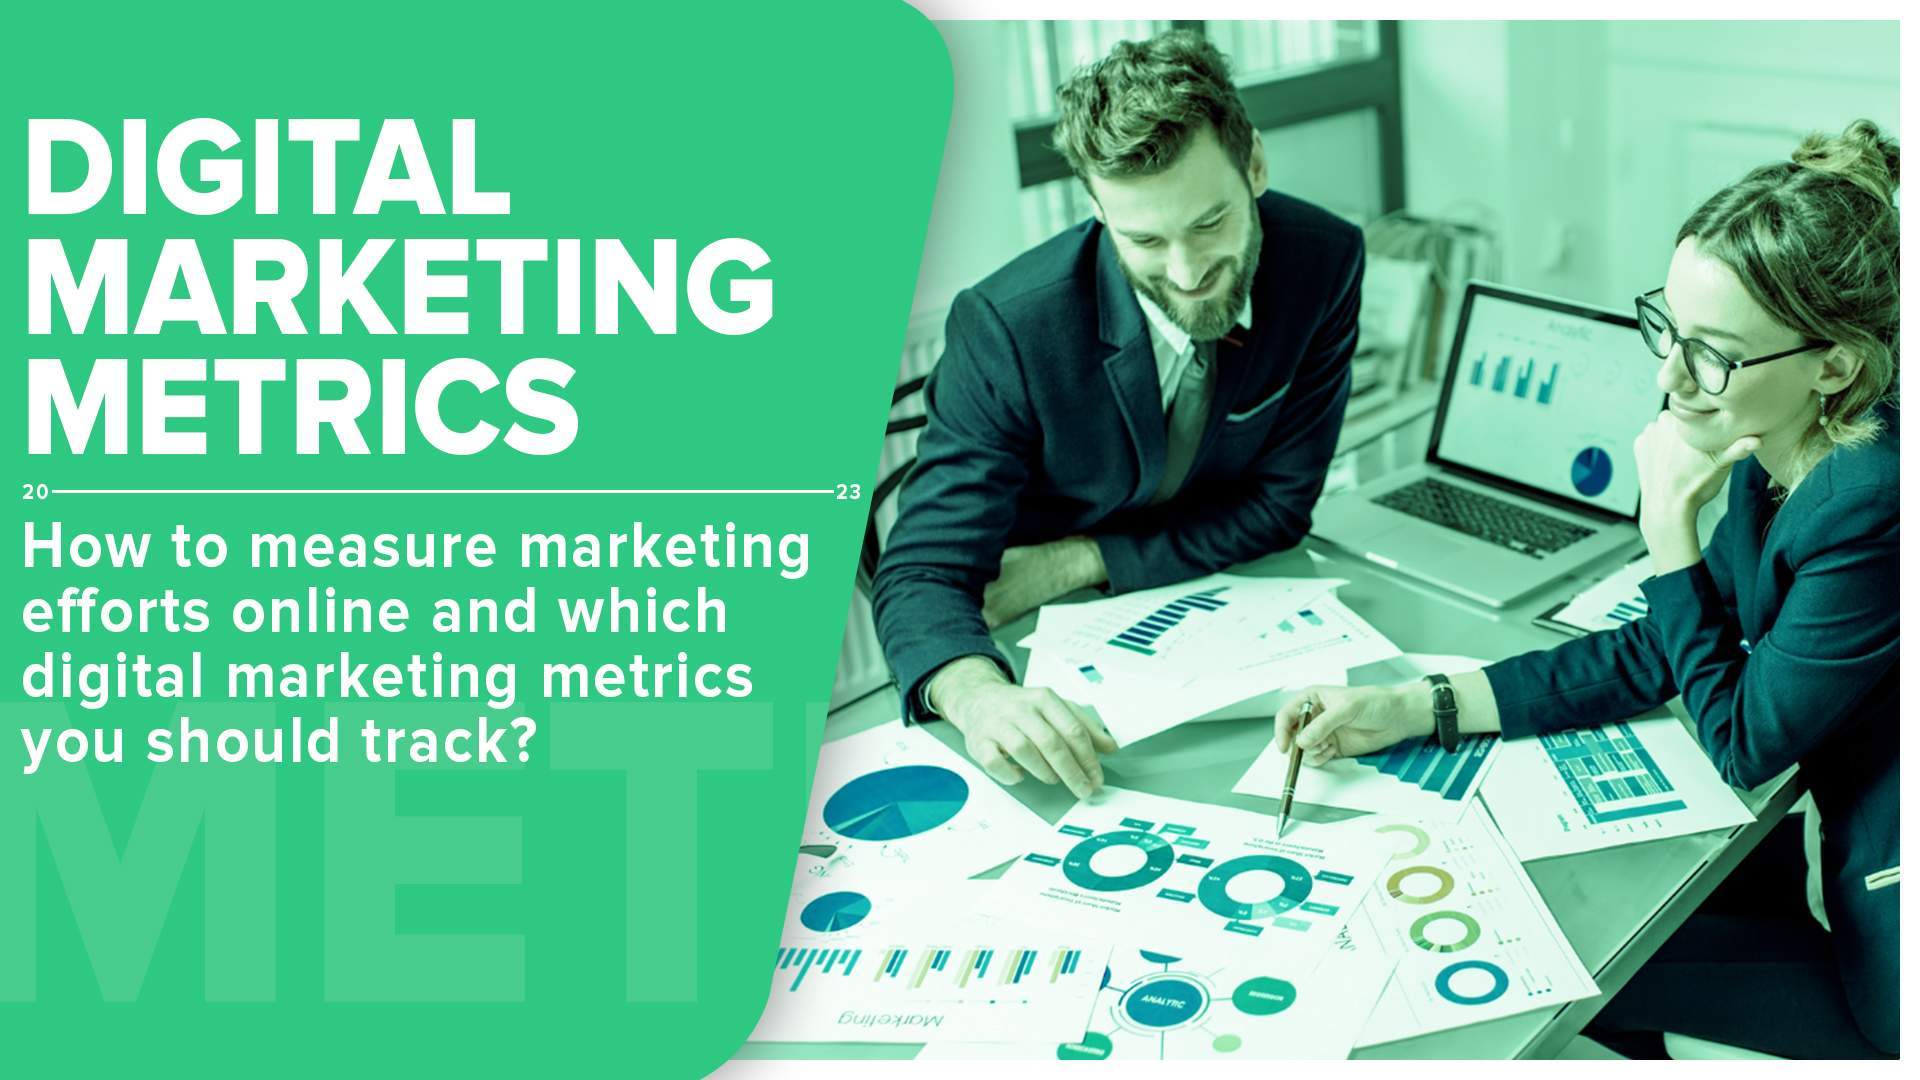 10 digital marketing metrics each business should track cover image.